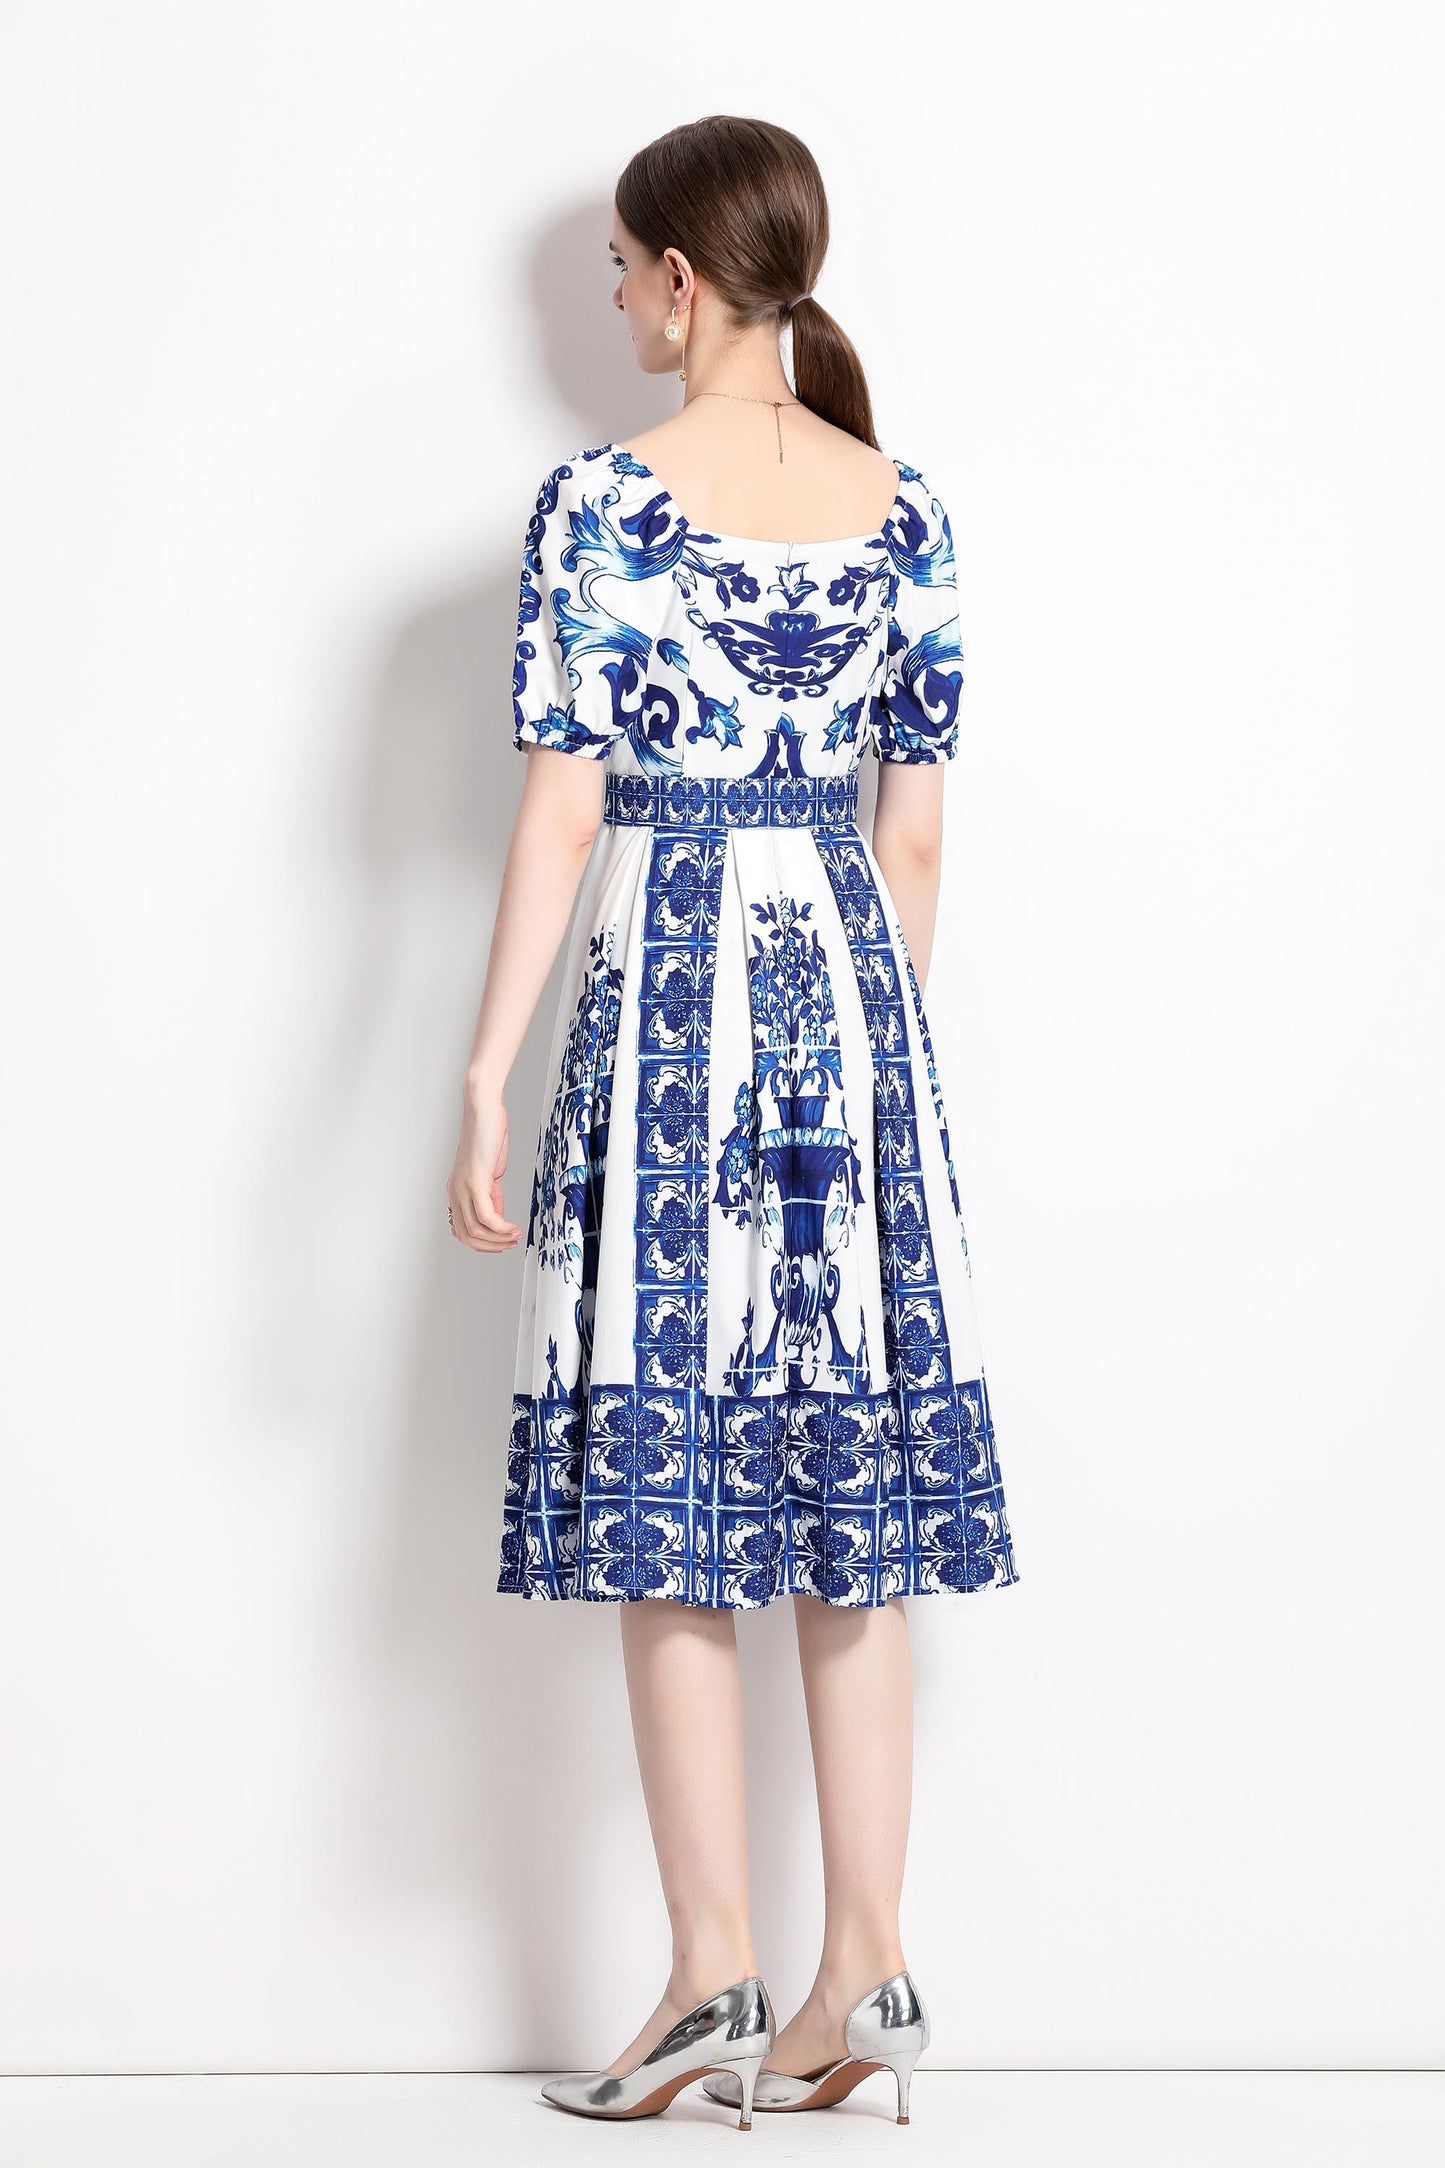 Blue Floral Print Vintage Short Sleeve Midi Dress with Belt